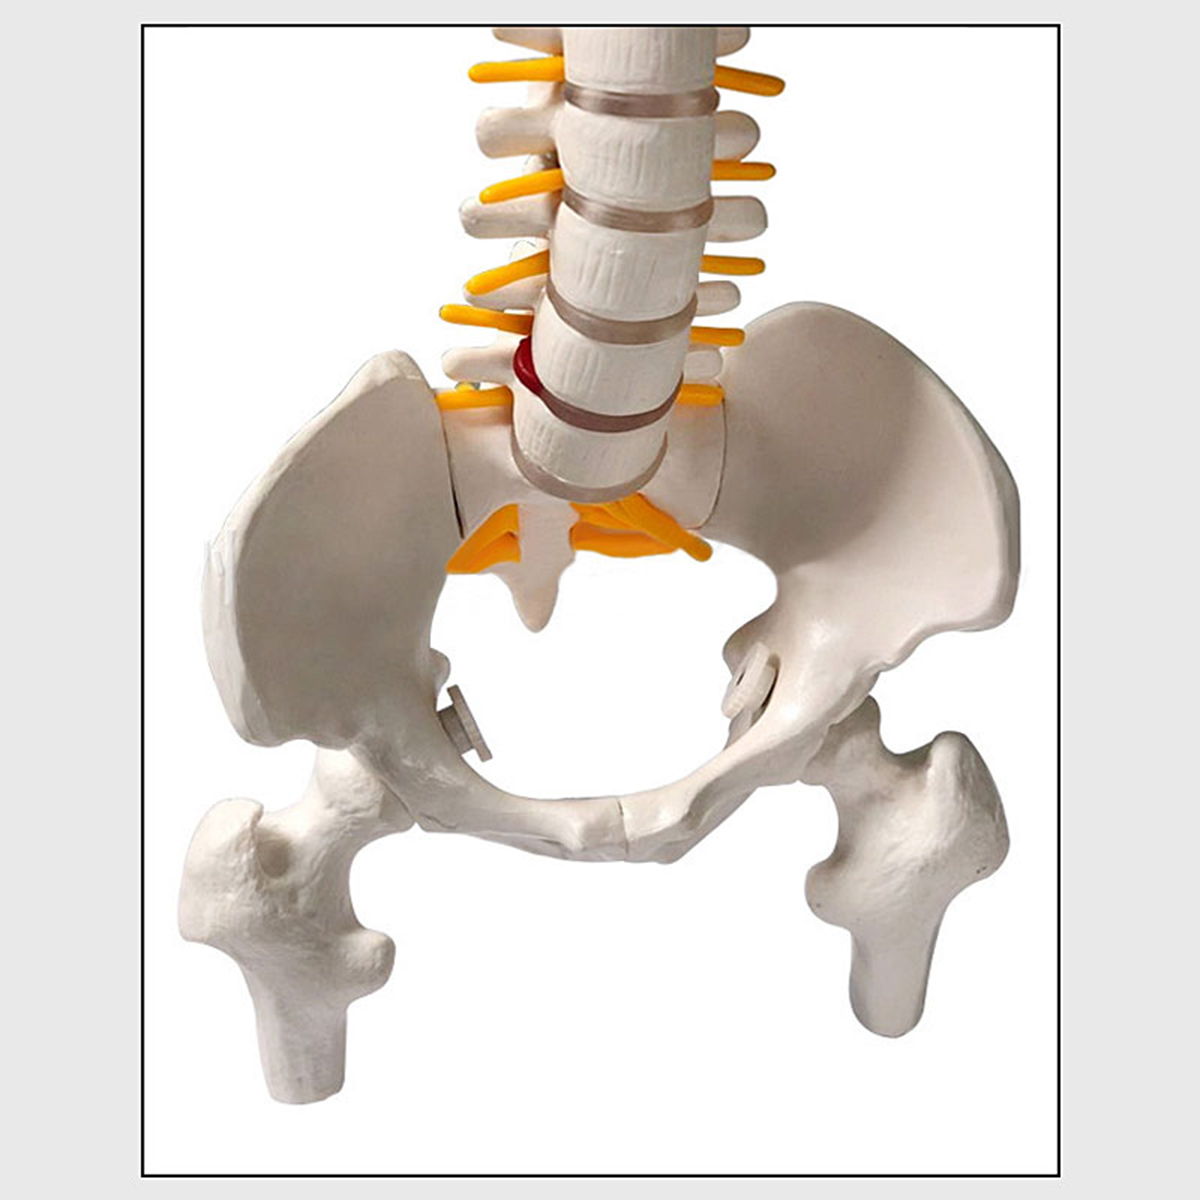 45cm-177quot-Spine-Medical-Model-With-Pelvis-Femur-Heads-12-Life-Lab-Equipment-1620821-9